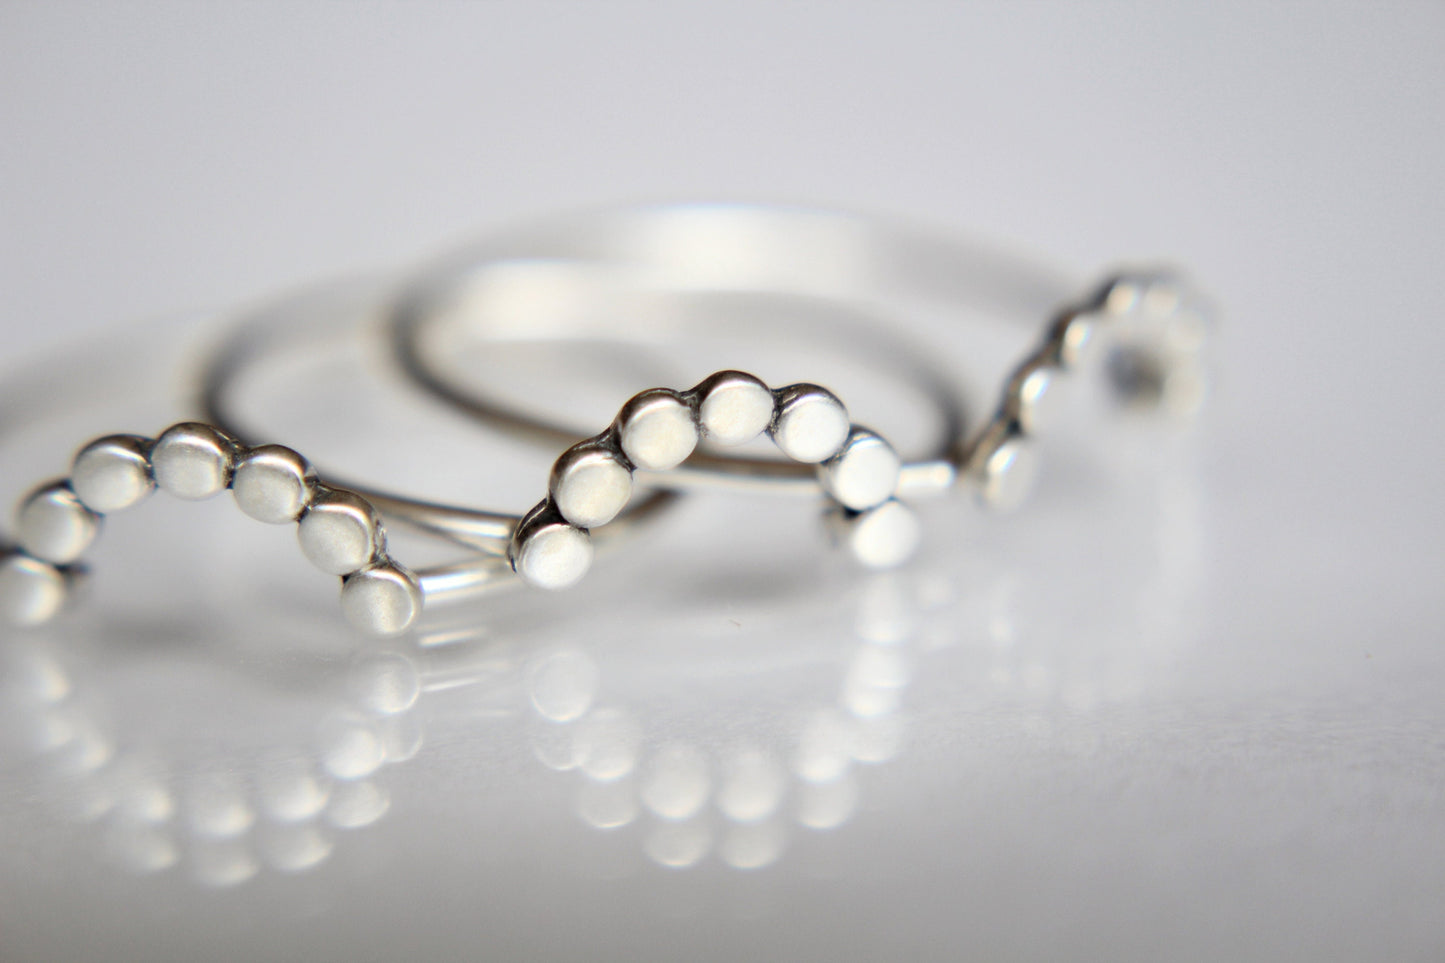 Arc Ring, Arch Ring, Half Circle Ring, Simple Band, Semi Circle Ring, Unique Ring, Minimalist Rings, Modern Ring, Stacking Ring, Gift